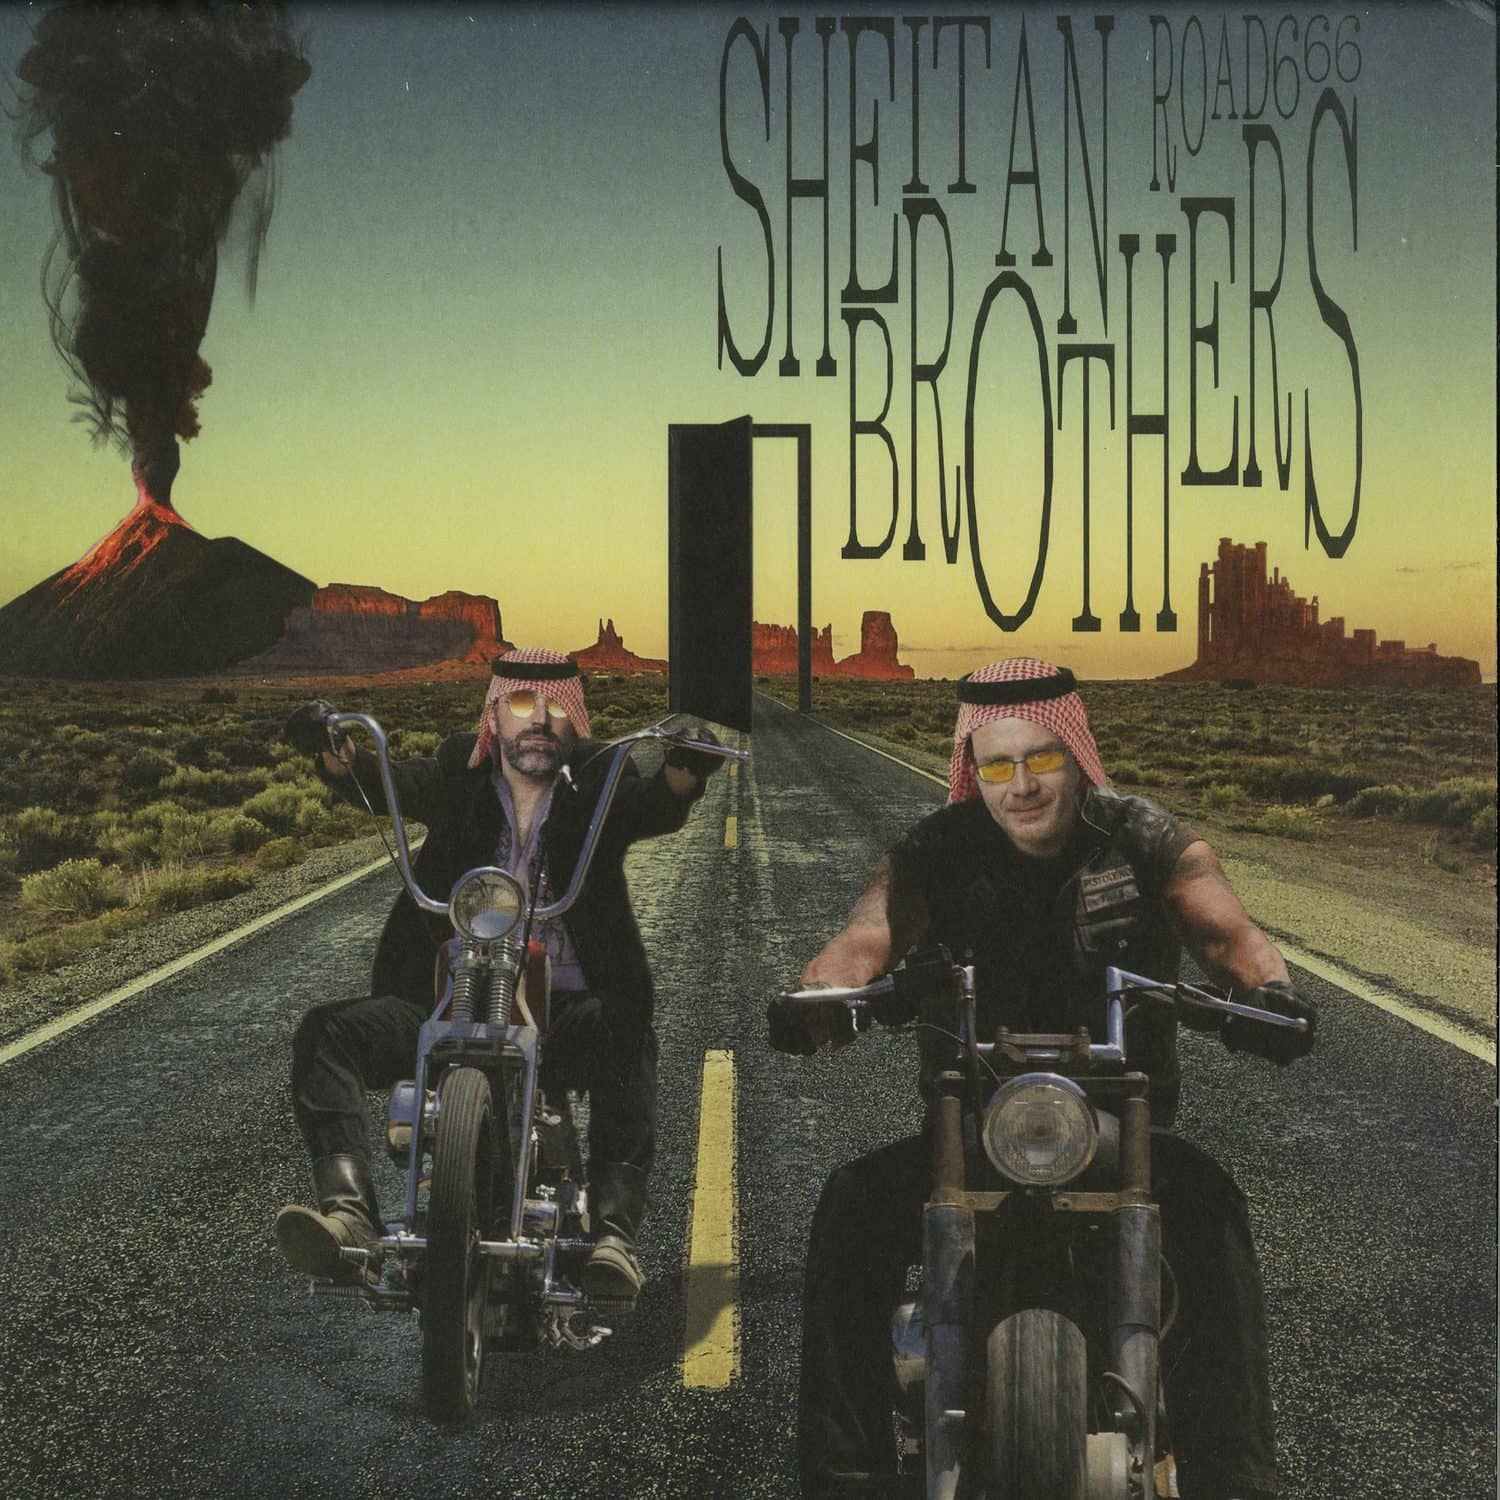 Sheitan Brothers - ROAD 666